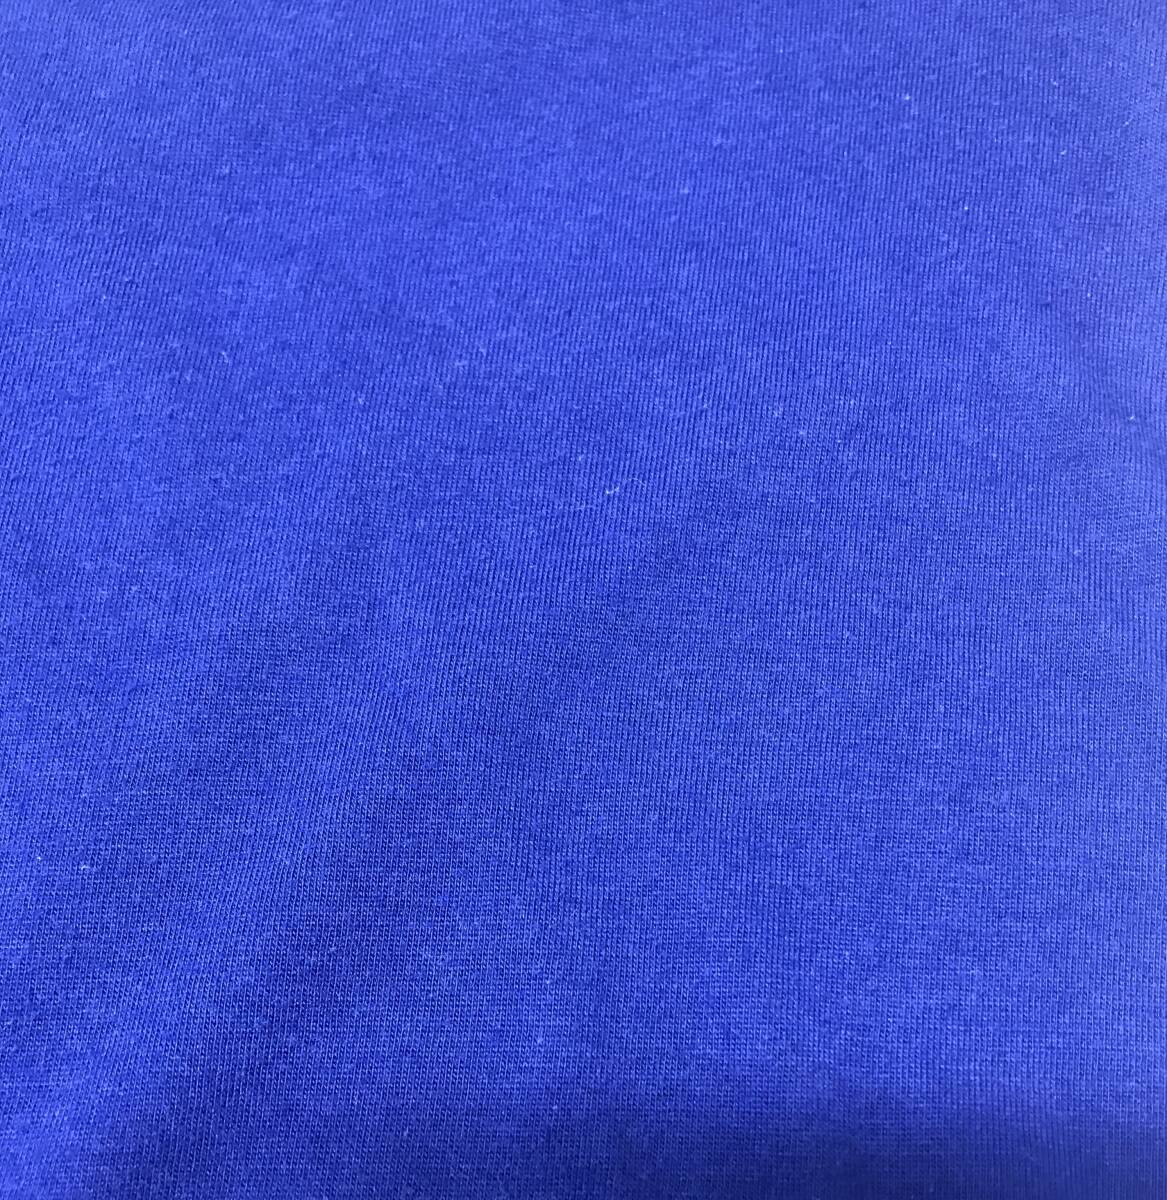 LOWRYS FARM ローリーズファーム トップス 半袖Tシャツ レディース Mサイズ ネイビーxブルー[ST-0870]_画像8